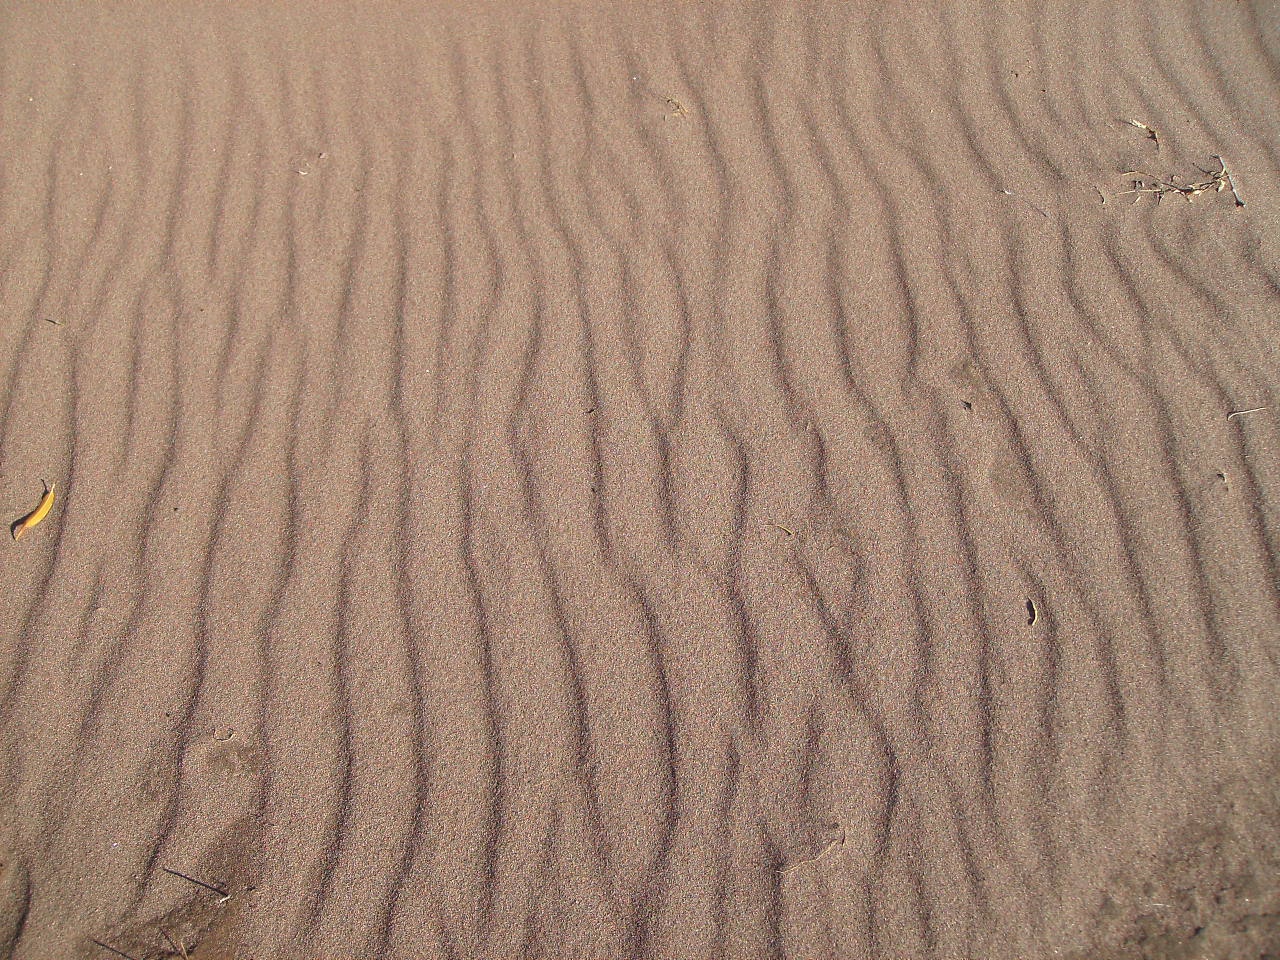 [Great+Sand+Dunes+National+Park+10-6-07+019.jpg]